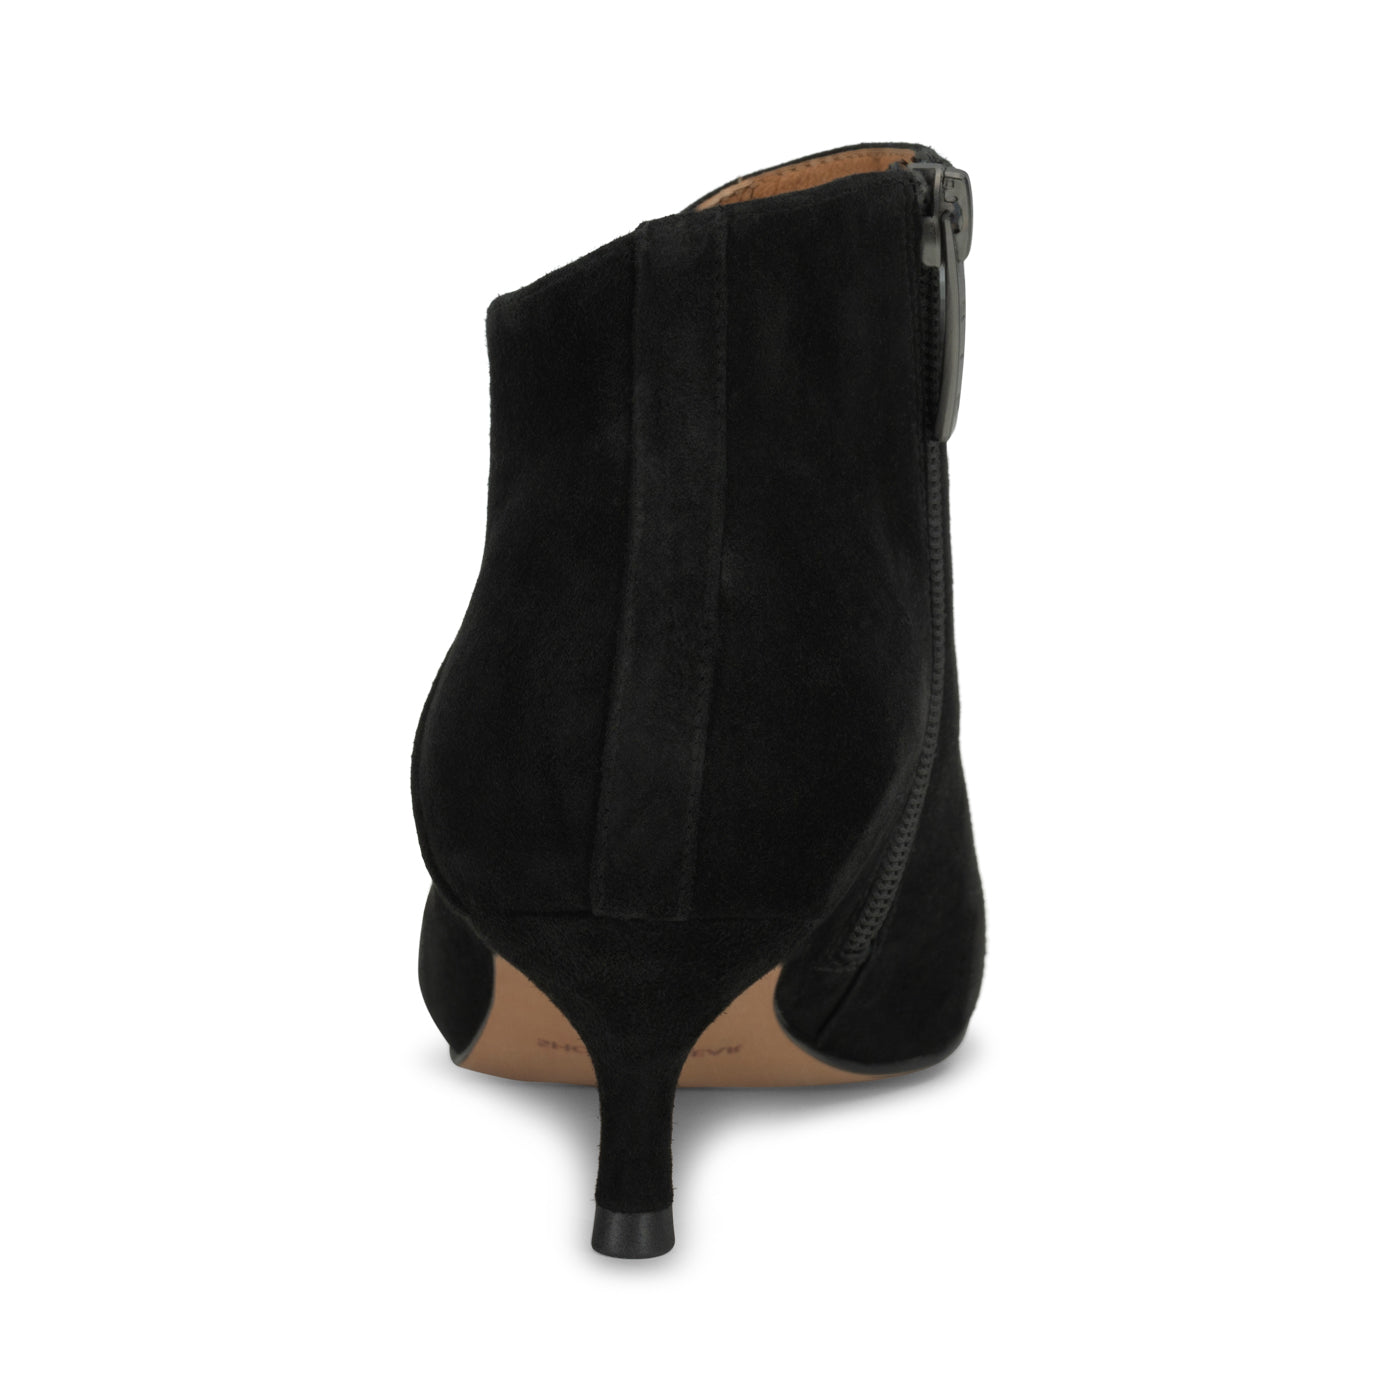 SHOE THE BEAR WOMENS Saga støvlet ruskind Heels 110 BLACK